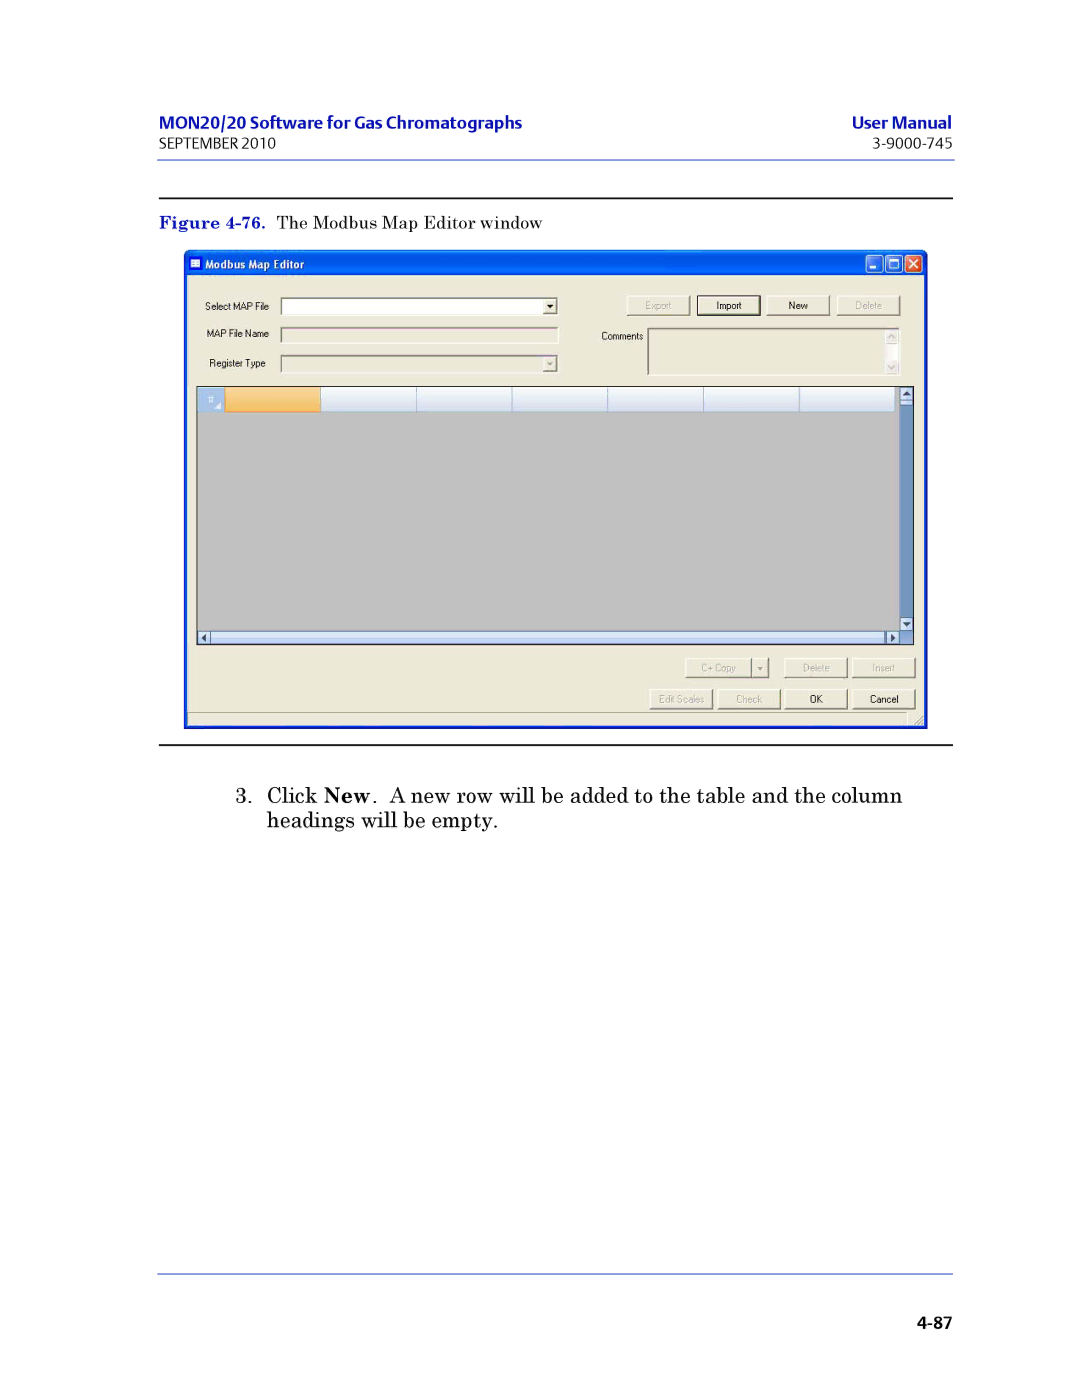 Emerson Process Management 3-9000-745 manual The Modbus Map Editor window 